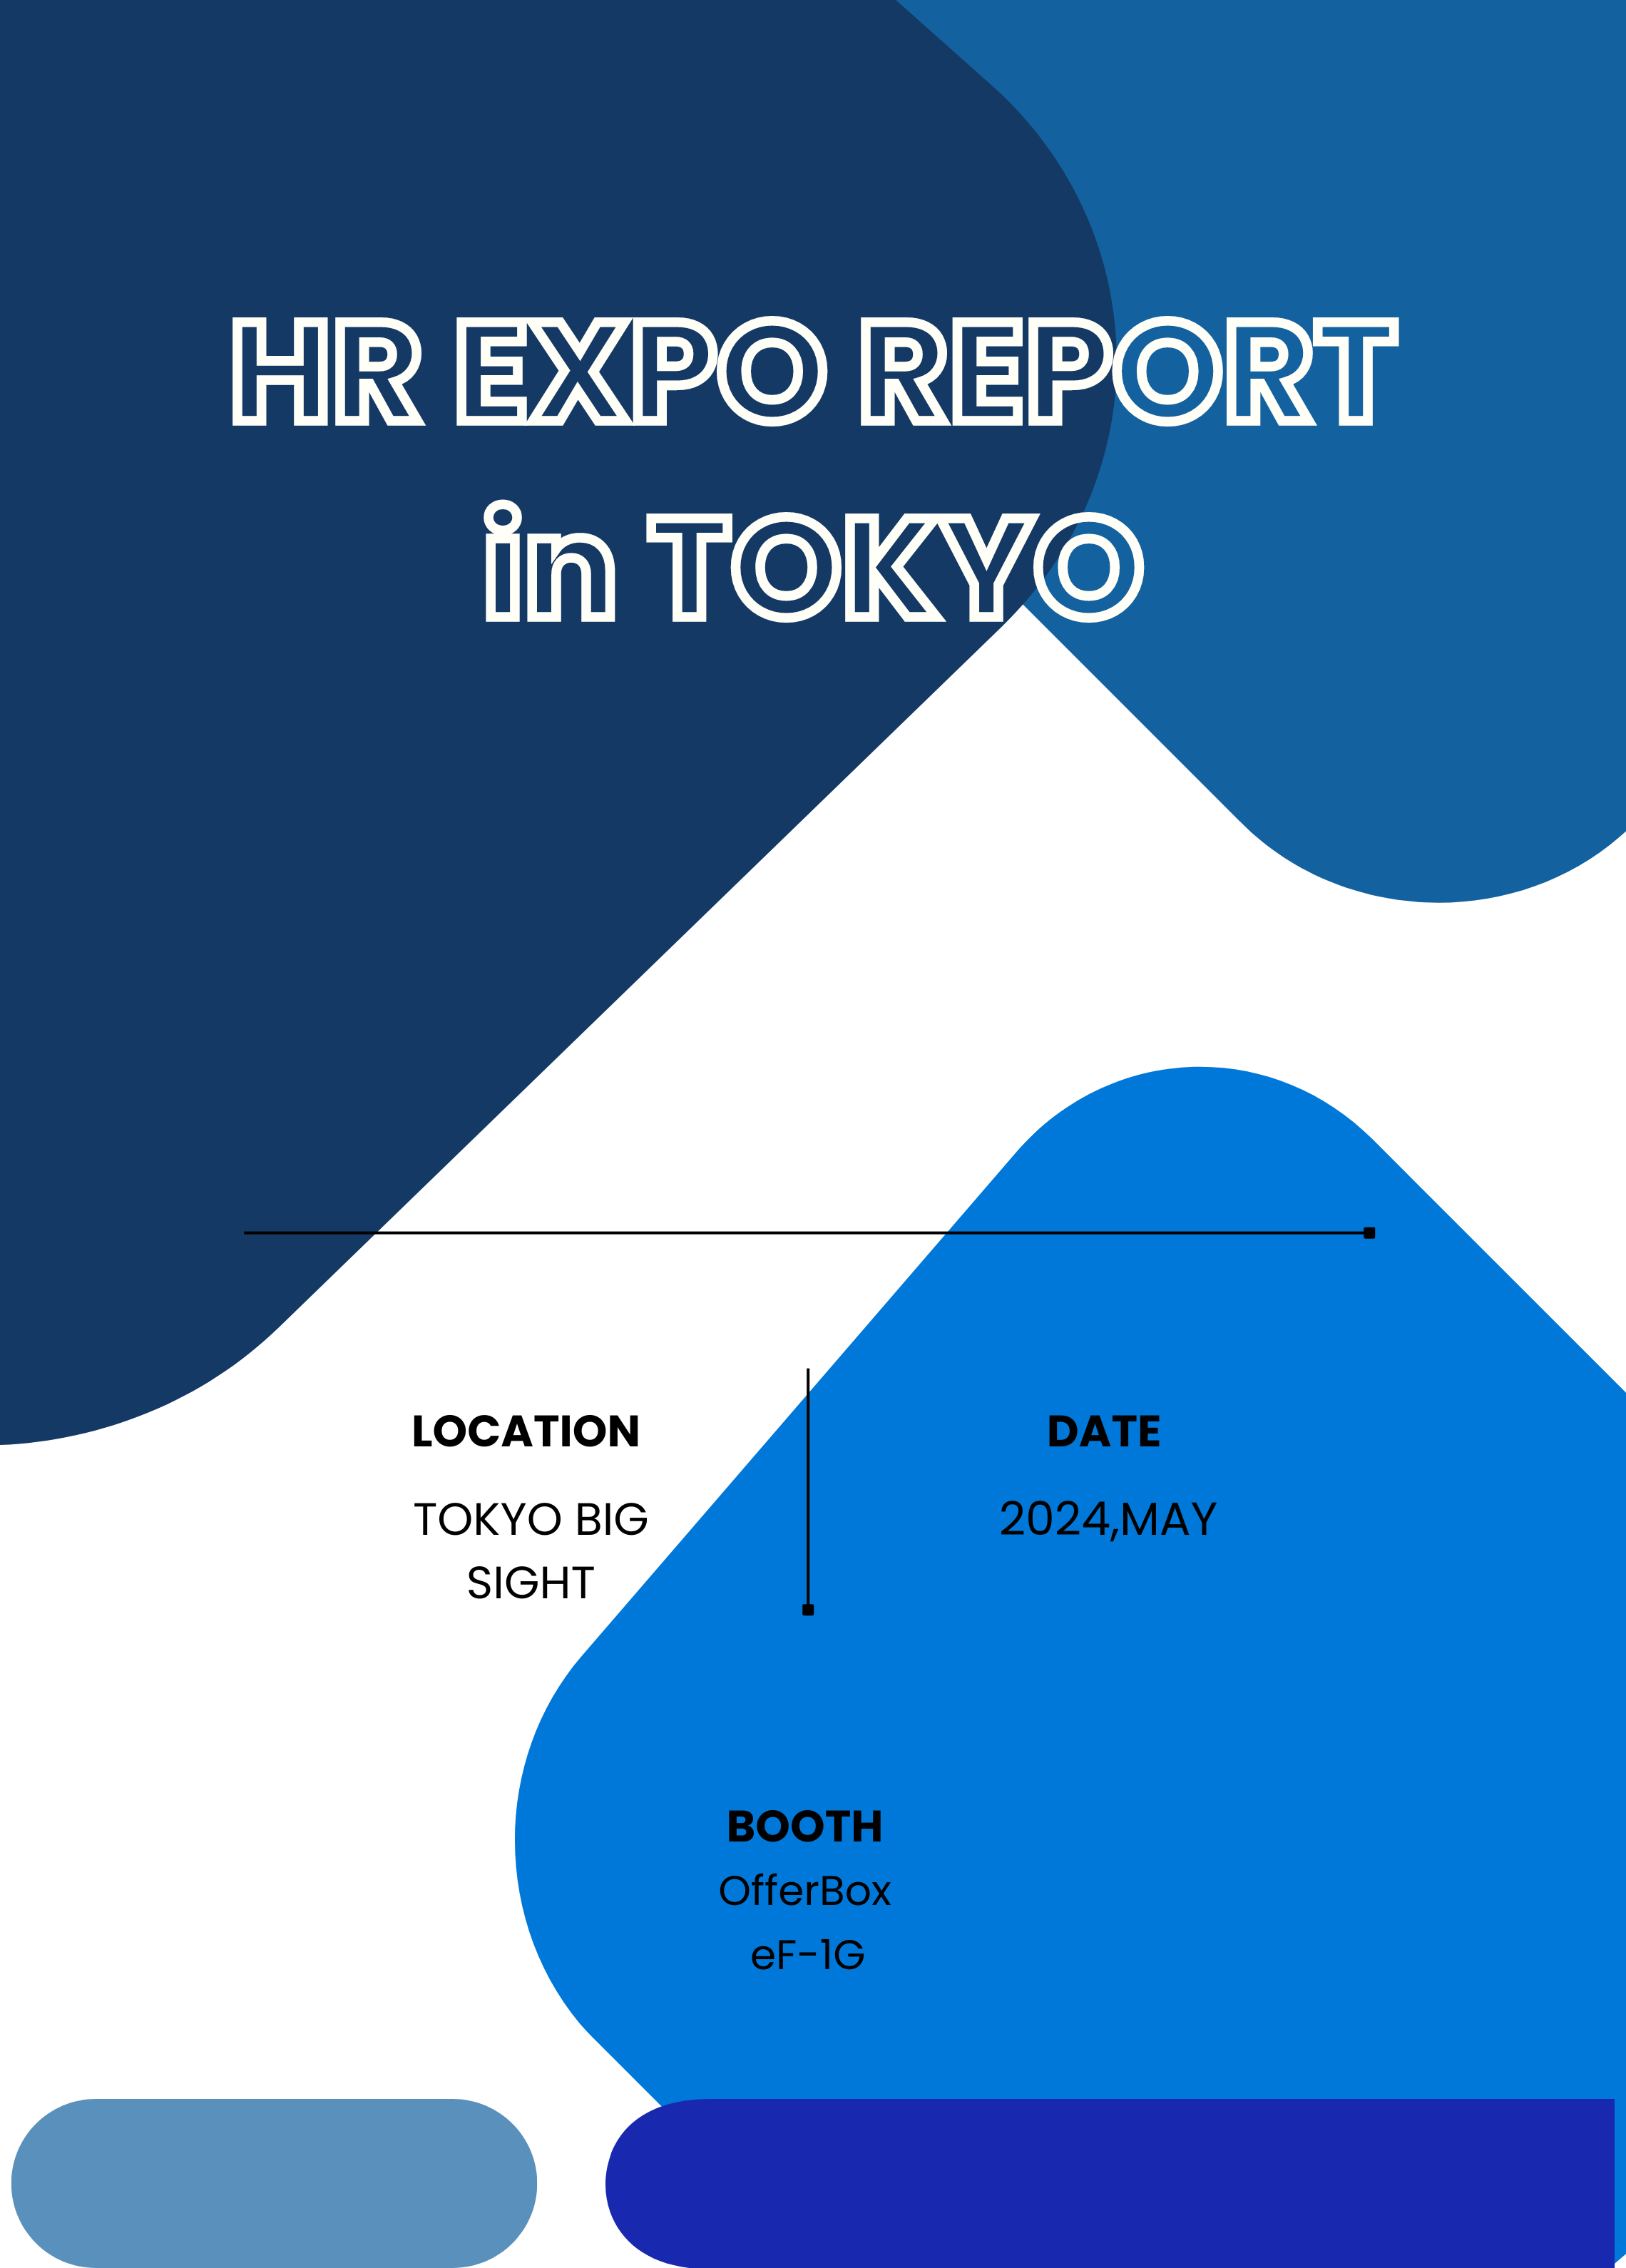 OfferBox出展レポート@第14回HR EXPO 春